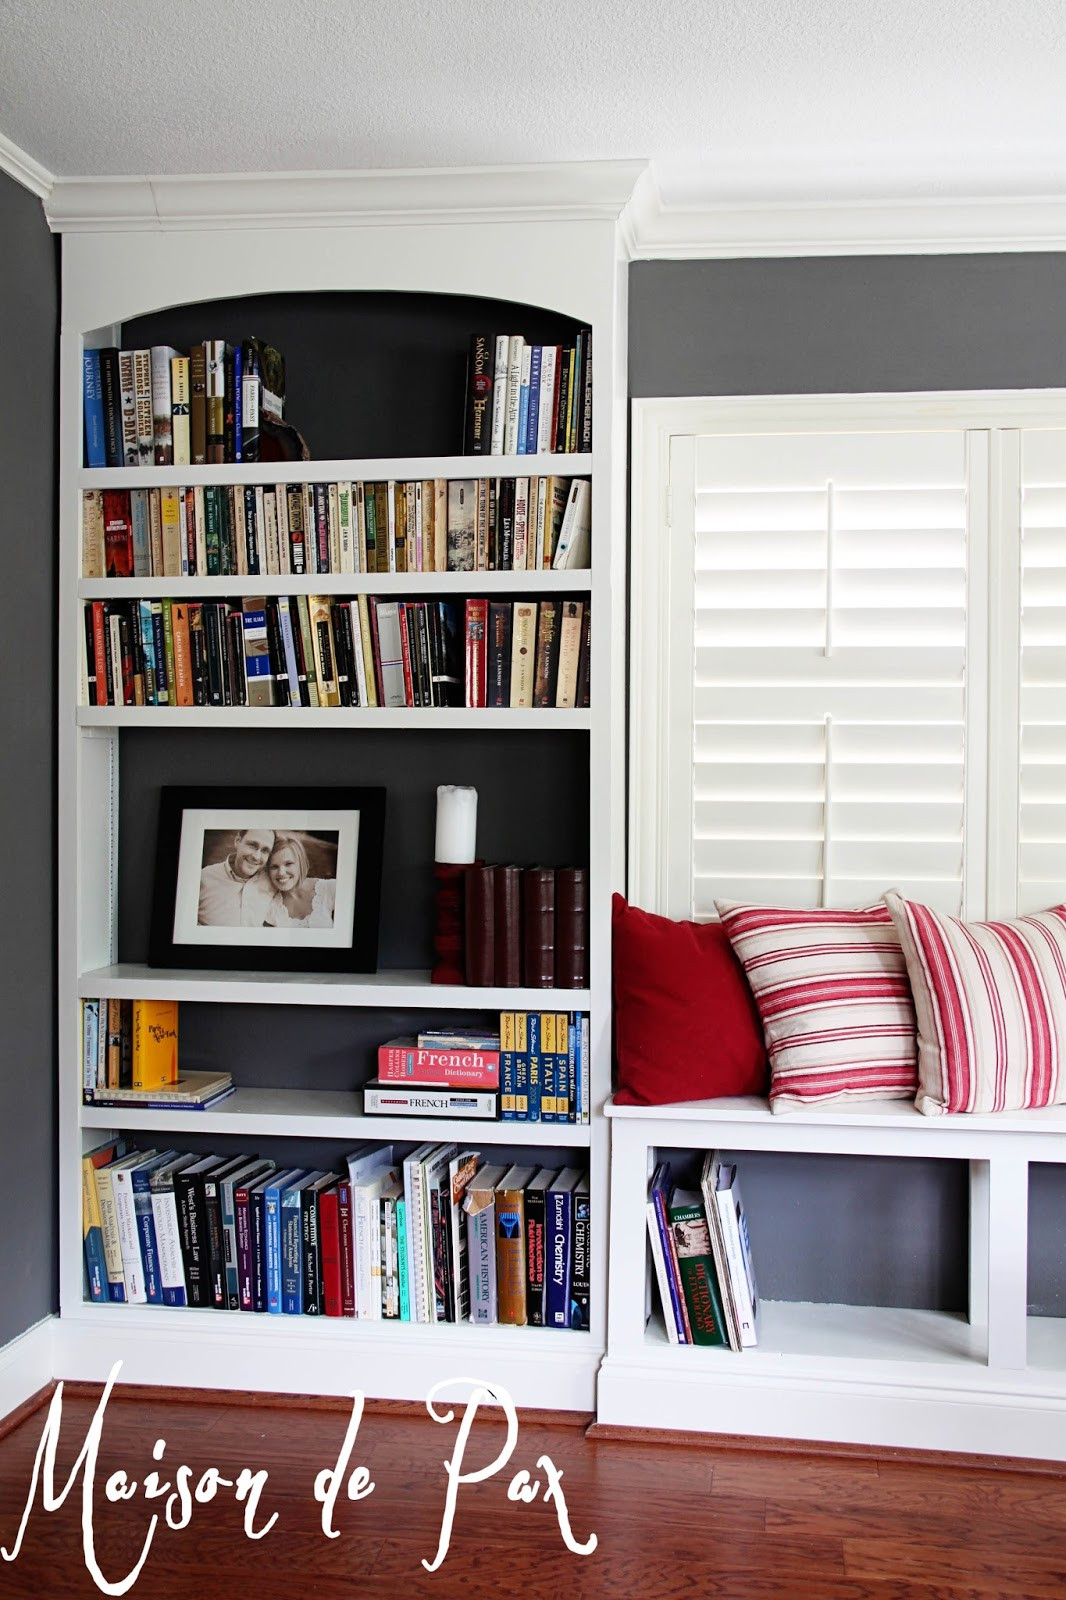 Best ideas about DIY Built In Bookshelves
. Save or Pin DIY Built In Bookshelves Maison de Pax Now.